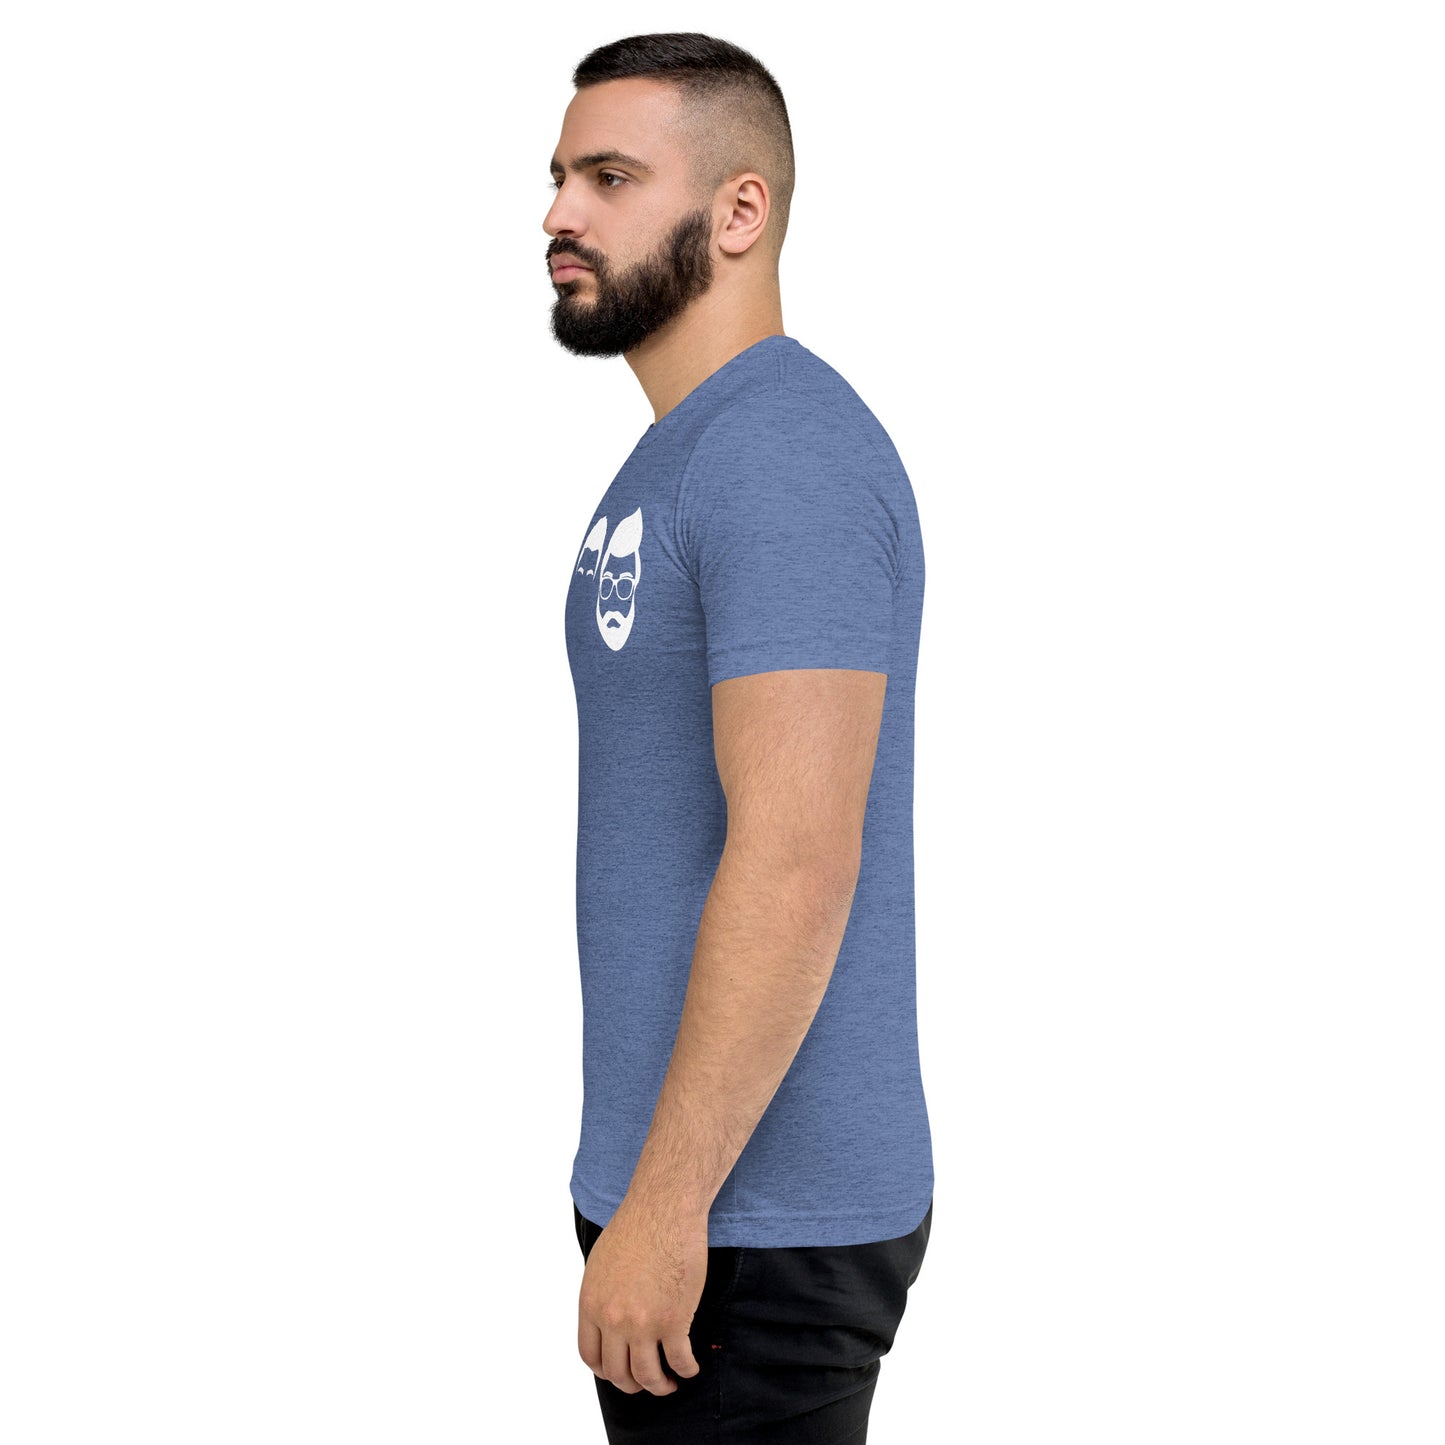 4Fellers - Printed Super Soft Triblend Short sleeve t-shirt